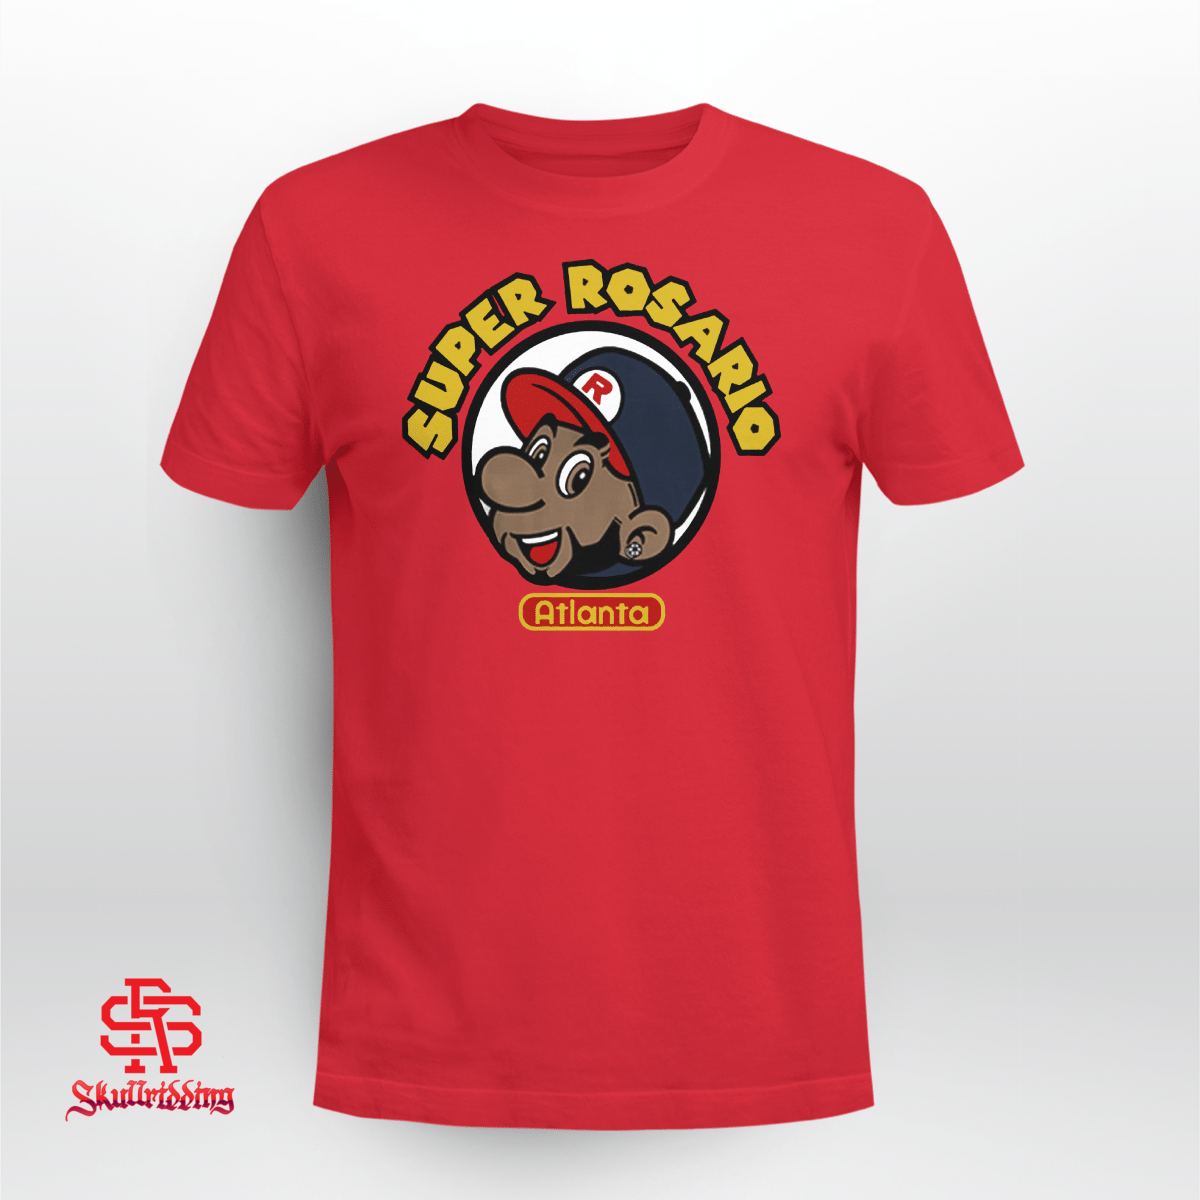 MLB Players, Shirts & Tops, Super Eddie Rosario Atlanta Braves Shirt